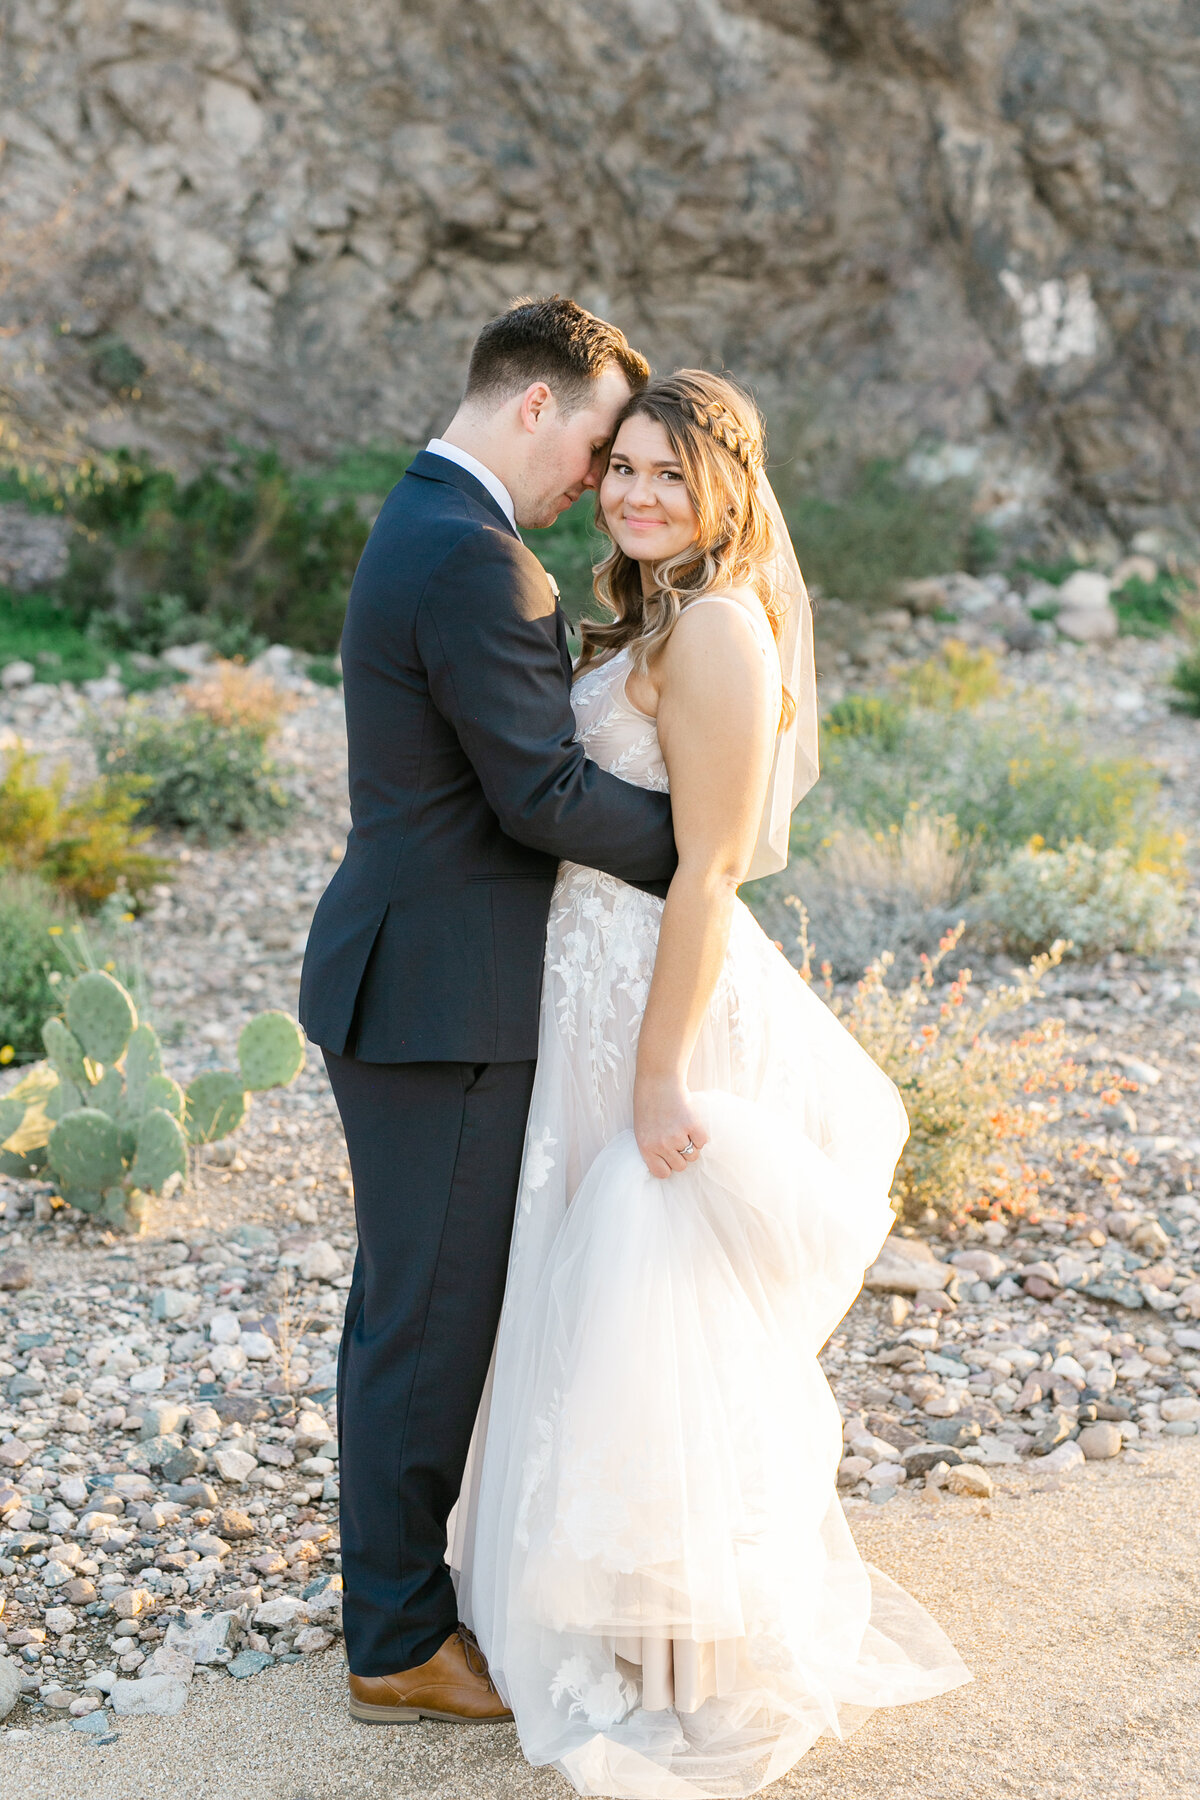 Karlie Colleen Photography - Arizona Backyard wedding - Brittney & Josh-205